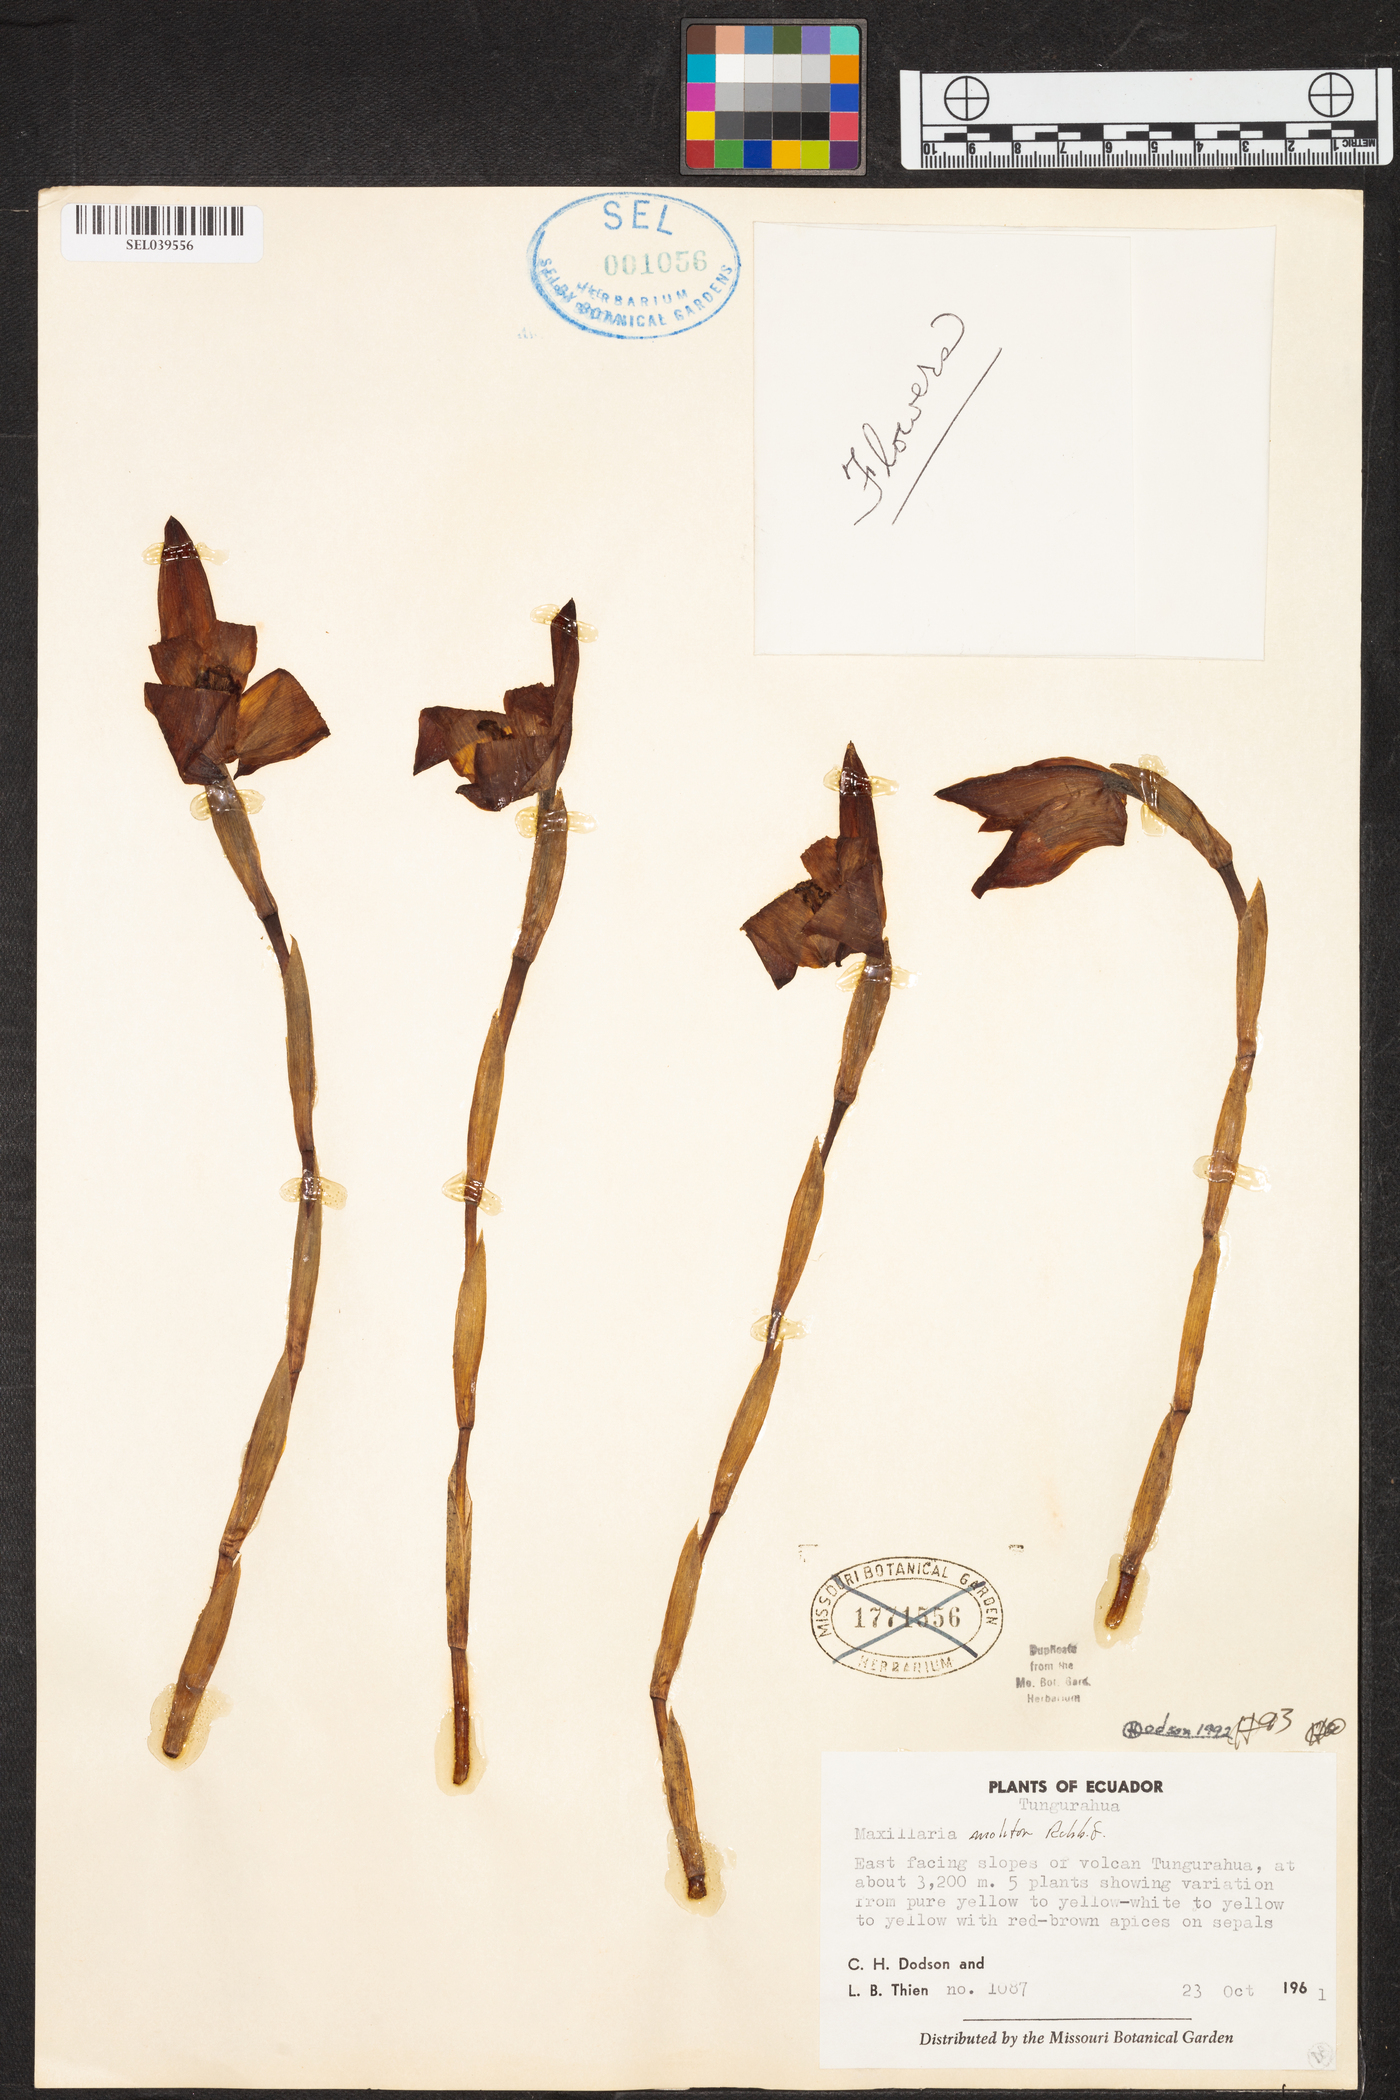 Maxillaria molitor image